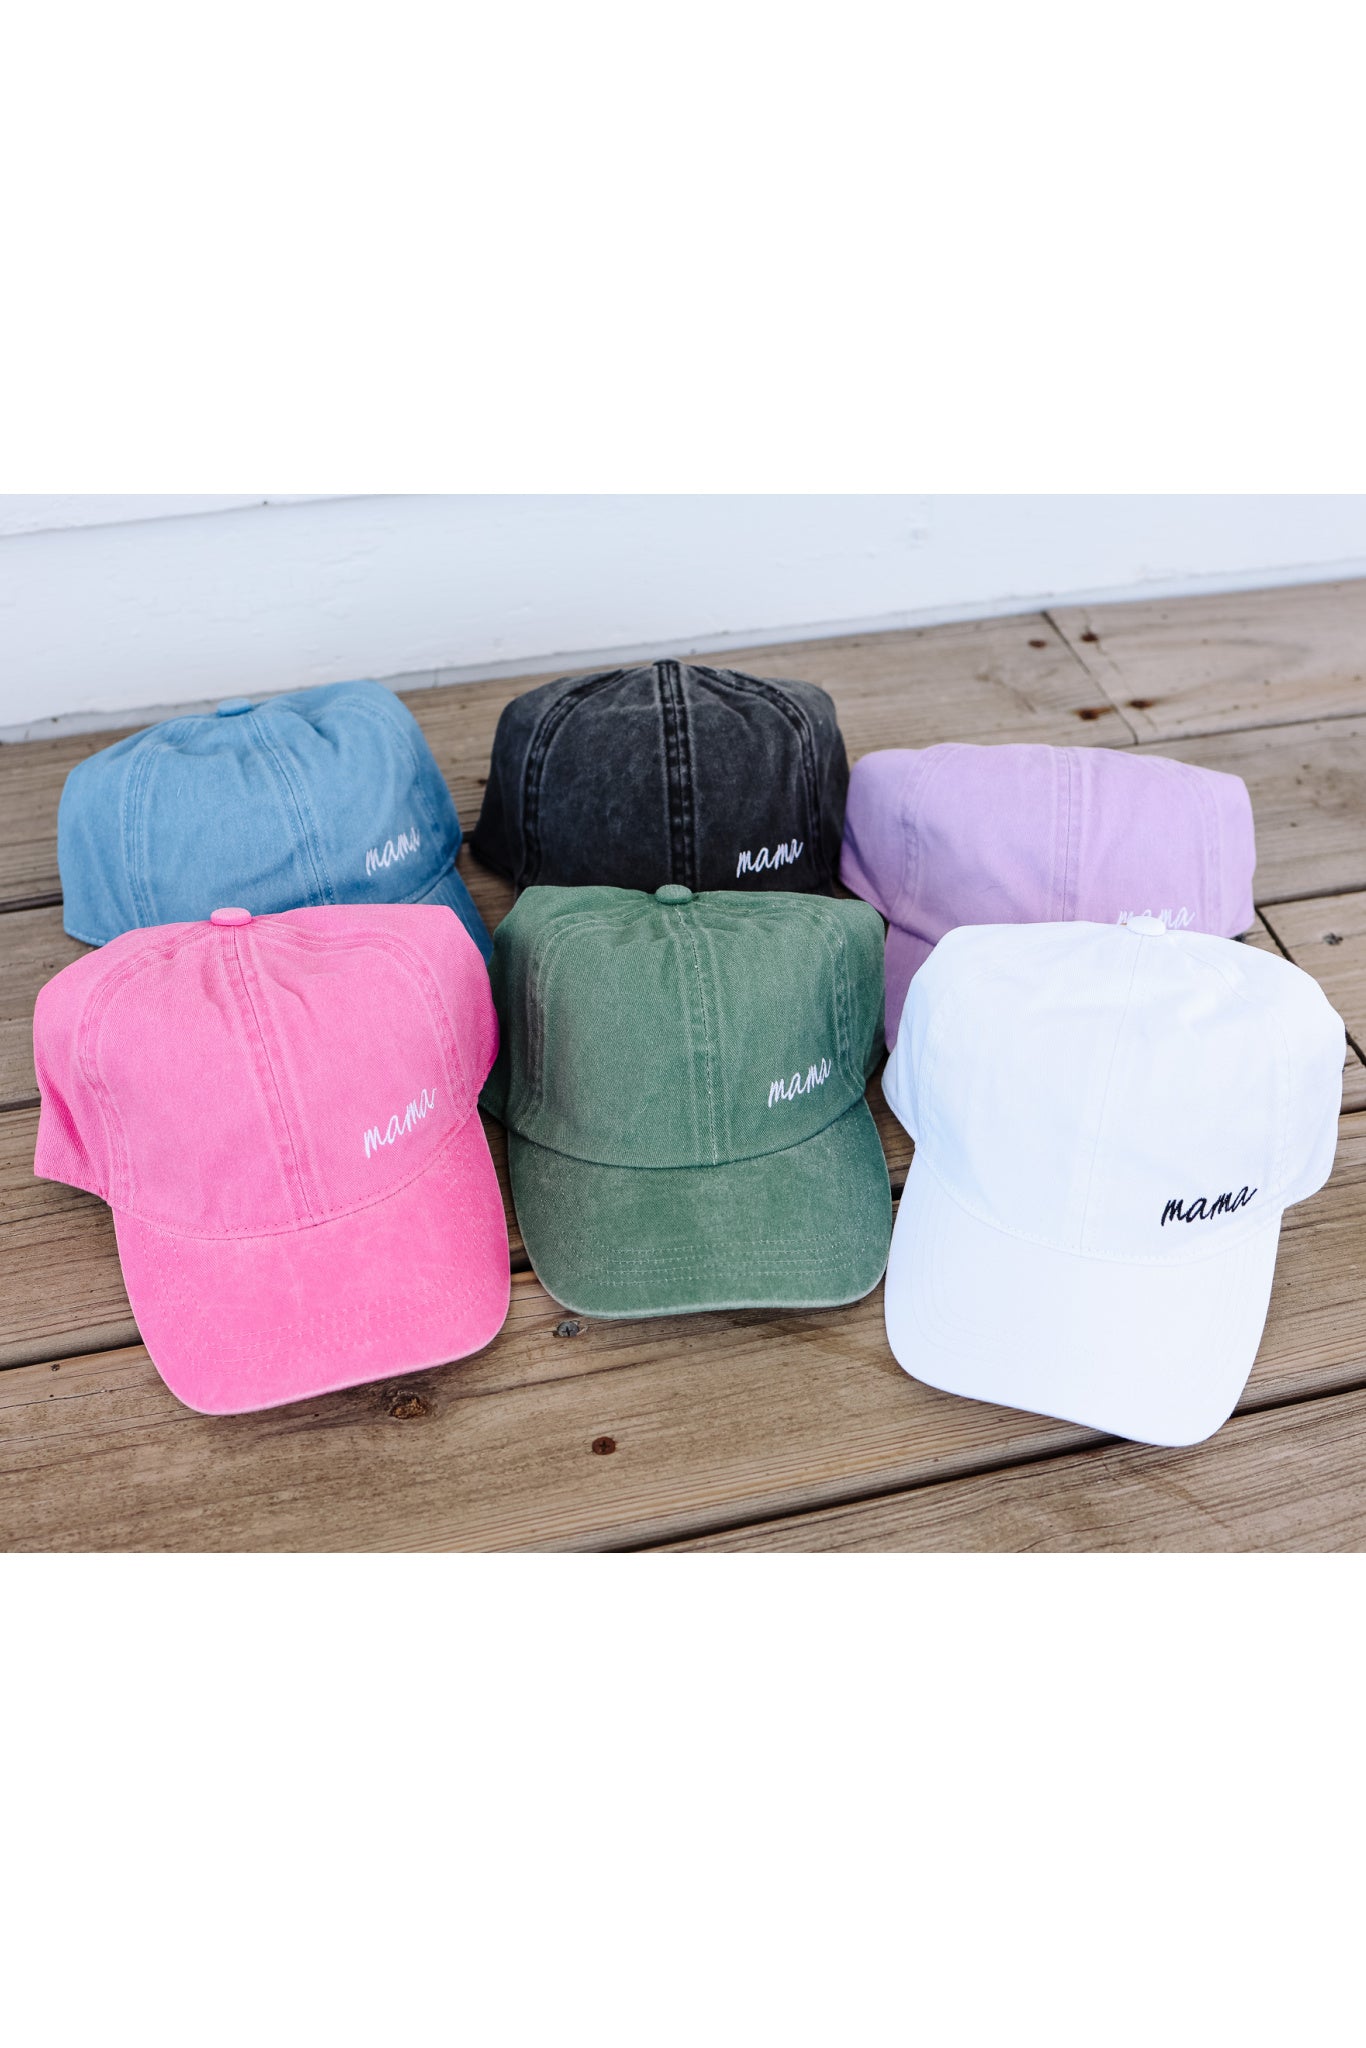 The Mama Baseball Hat - Multiple Colors